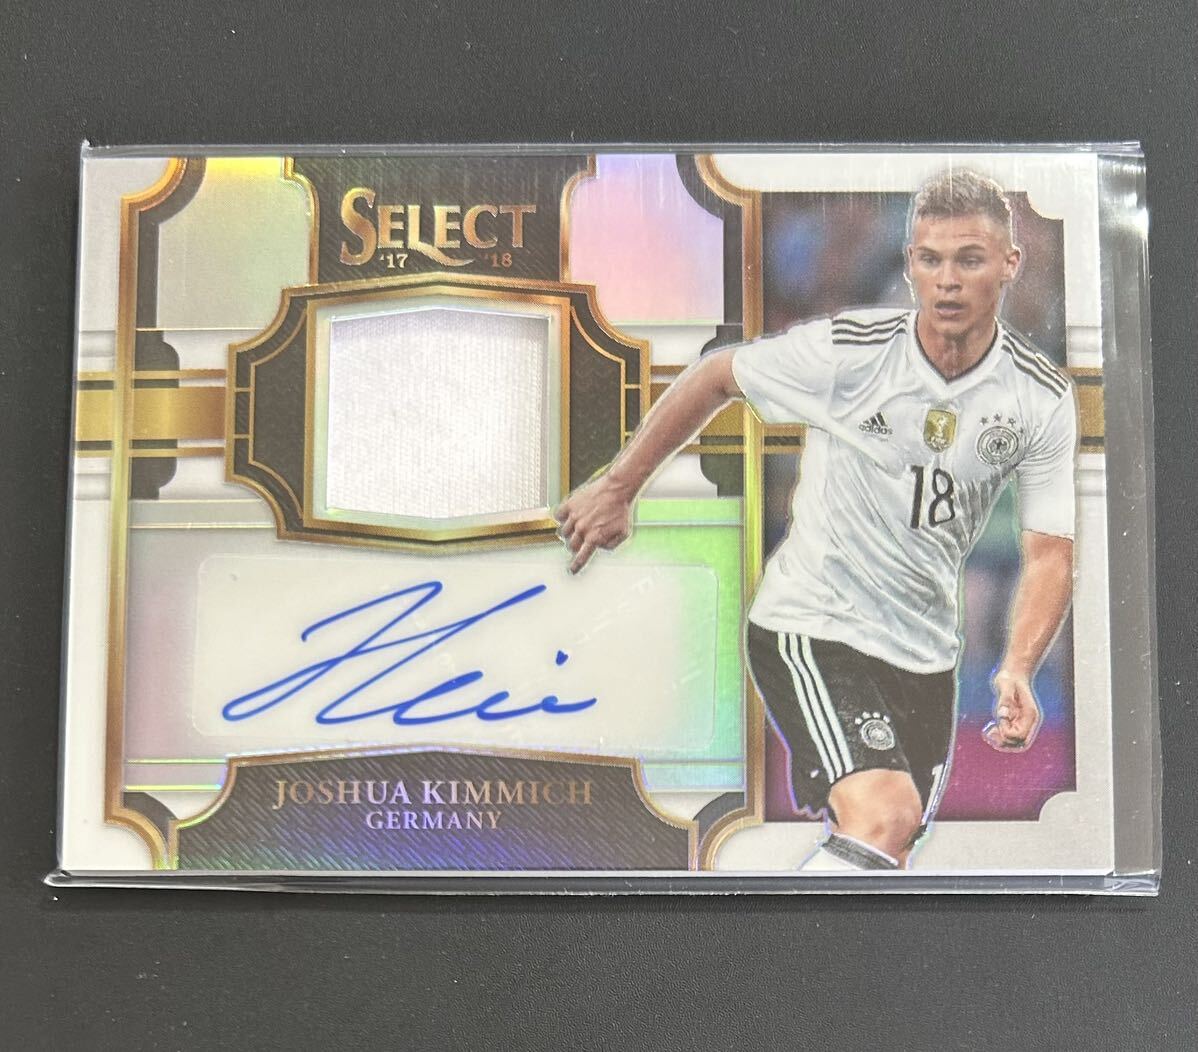 2017-18 Select Soccer Joshua Kimmich Germany Auto Jersey 99枚限定 Bayern Munchenの画像1